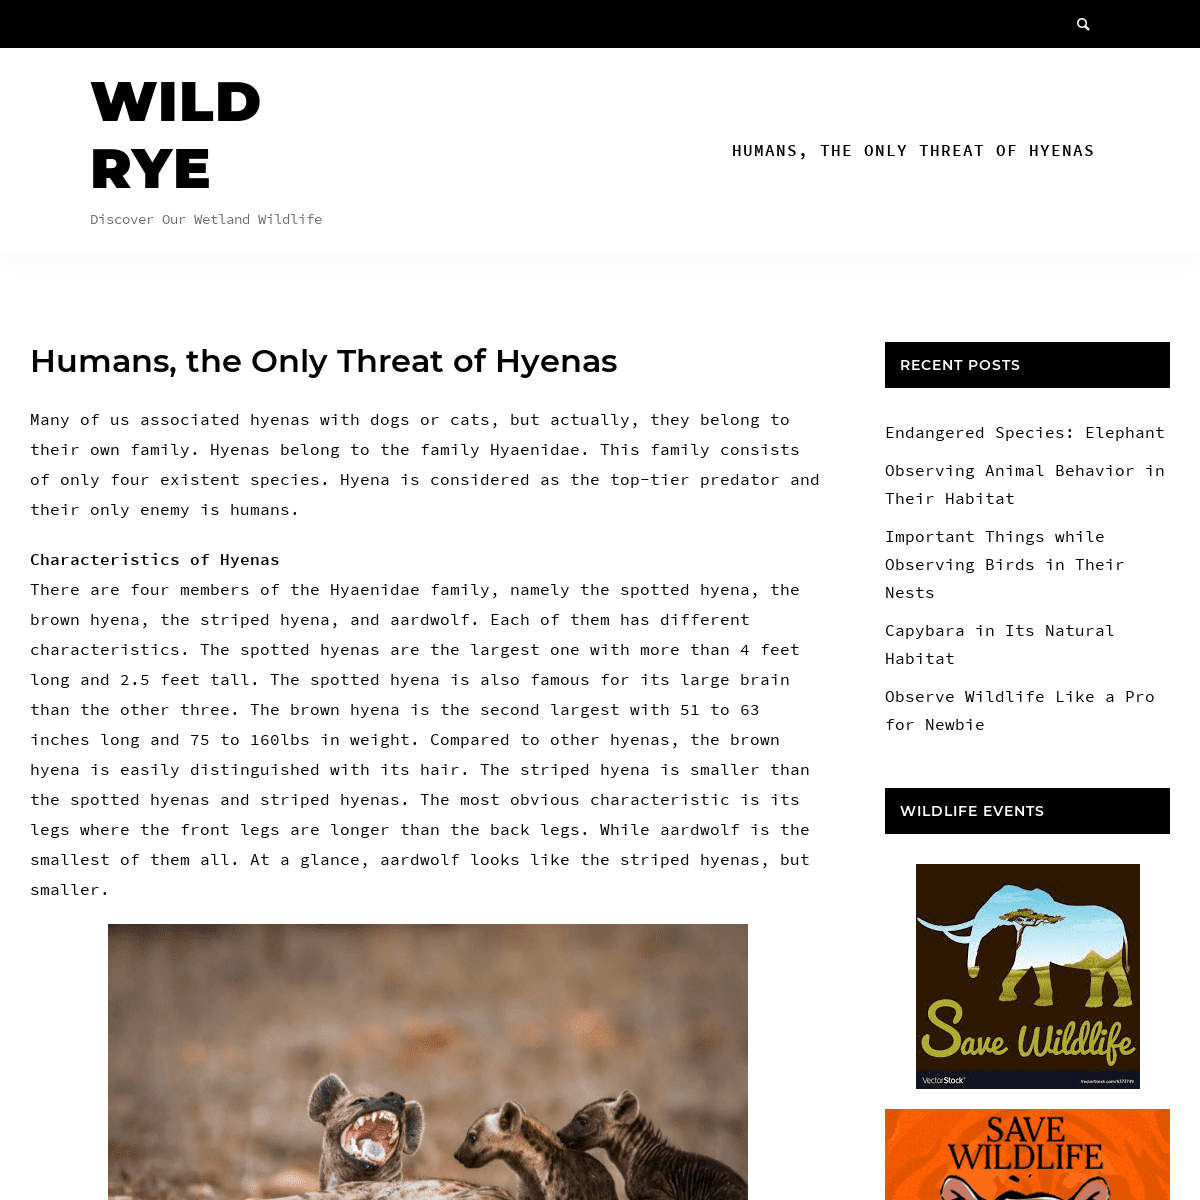 Wild Rye – Discover Our Wetland Wildlife